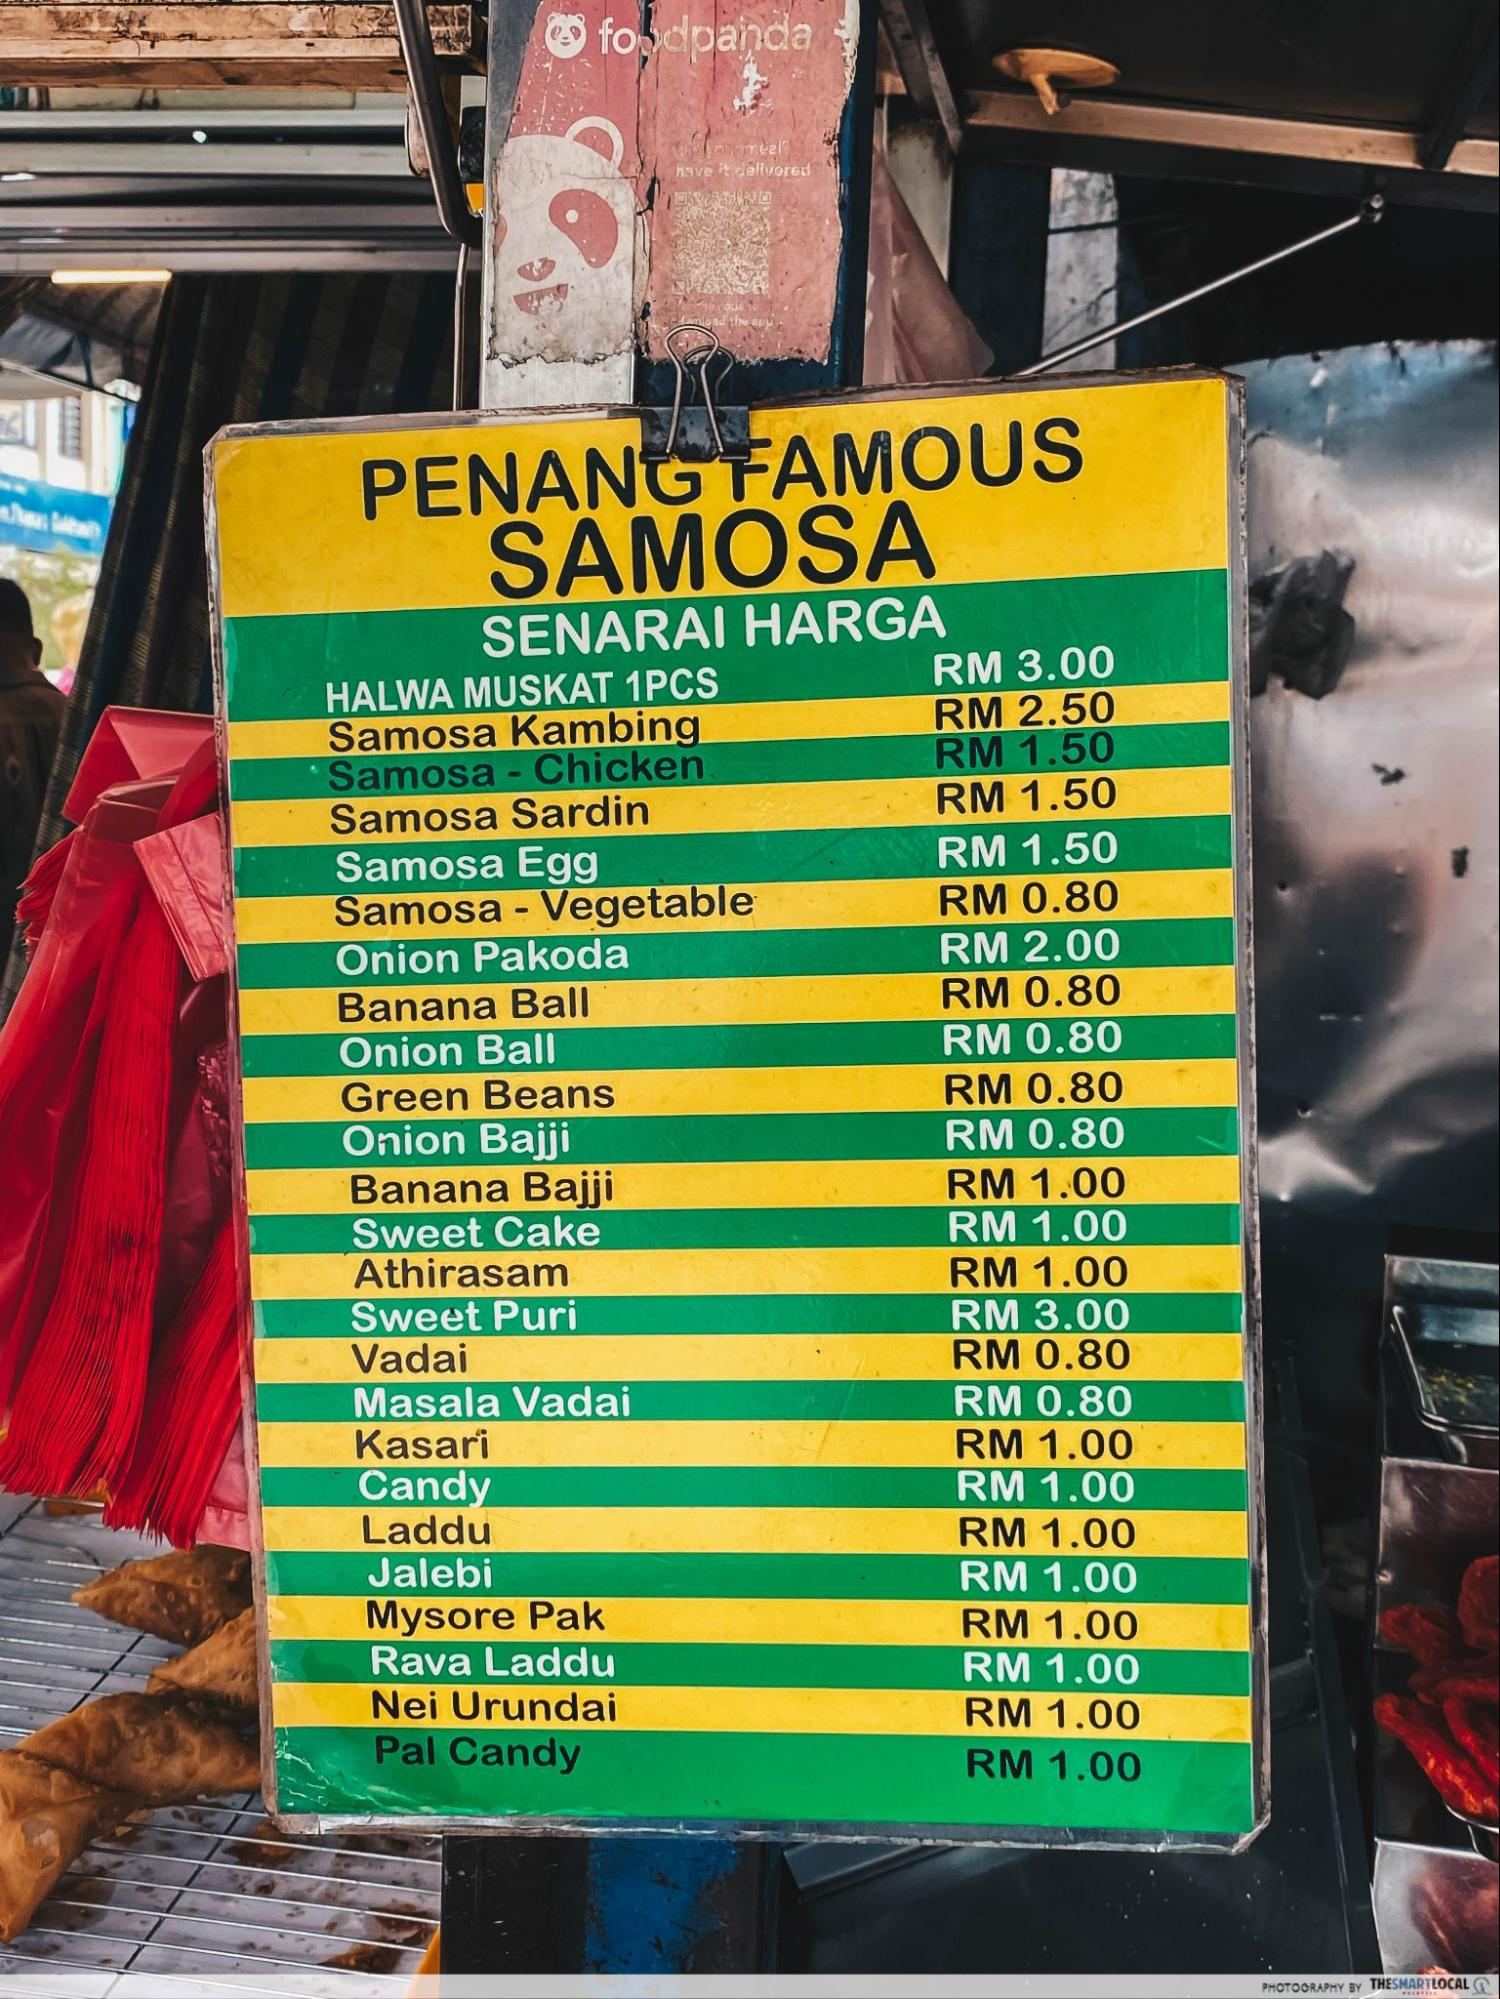 penang famous samosa - menu